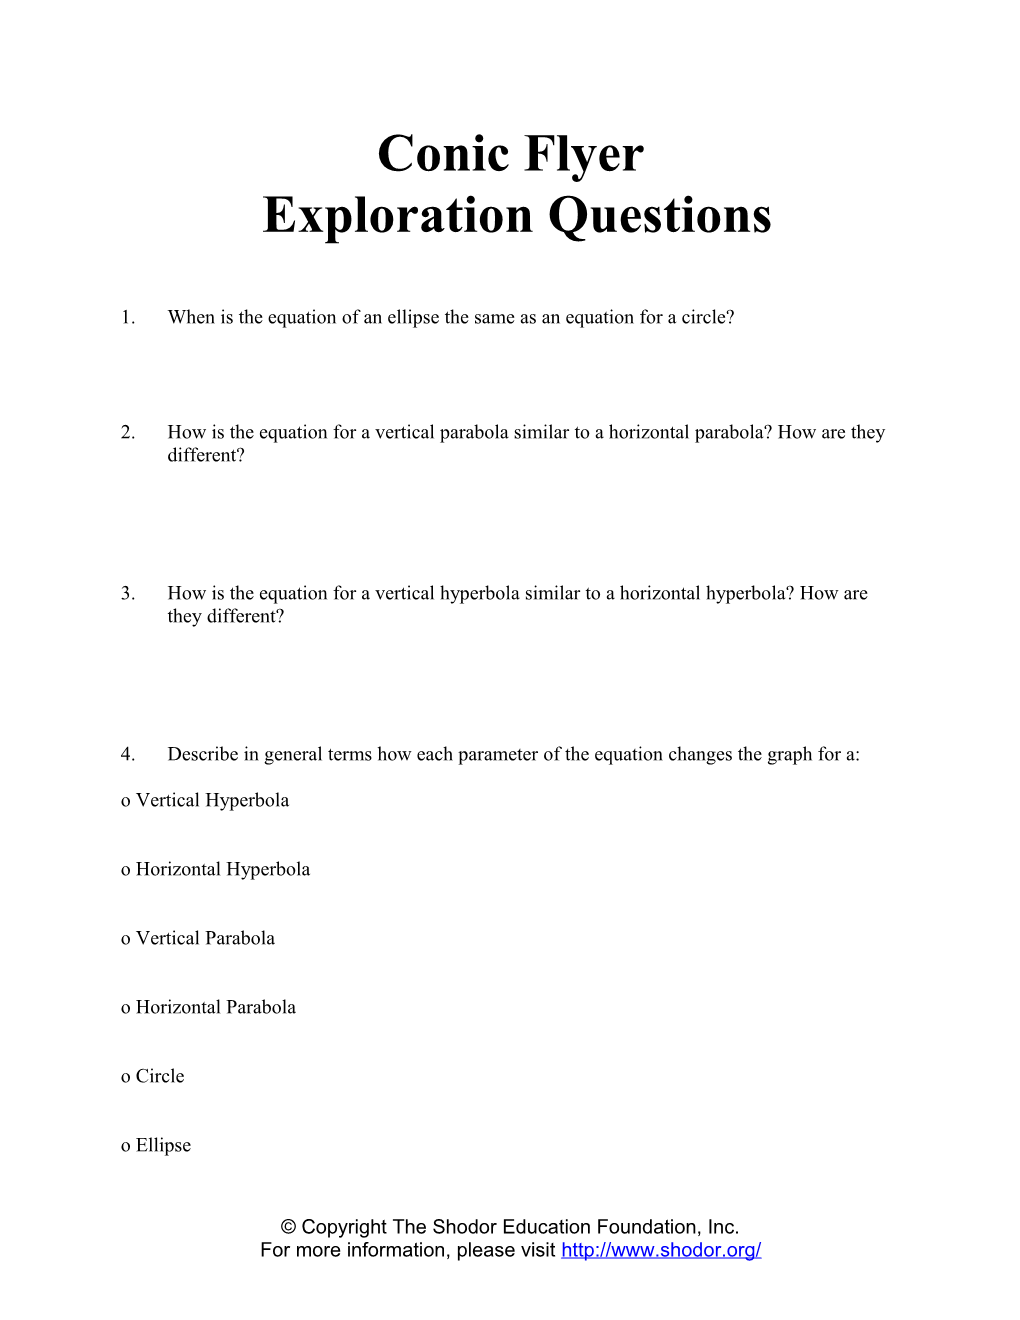 Exploration Questions s1